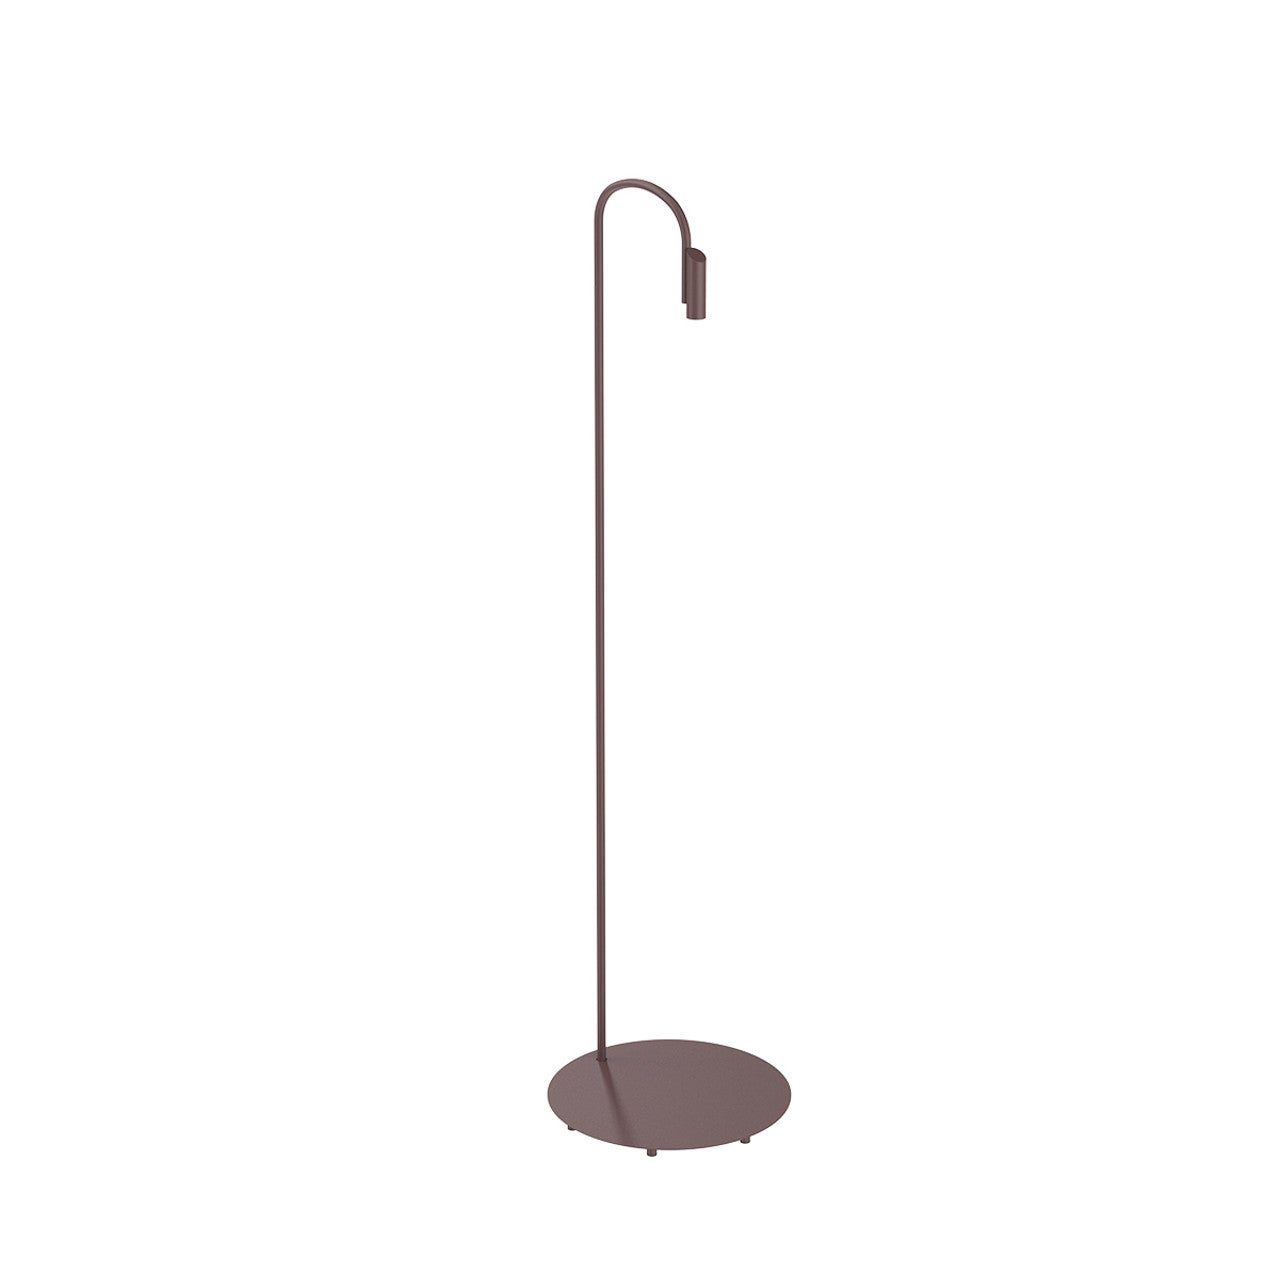 Flos Caule 2700K Model 4 Outdoor Floor Lamp in Deep Brown with Regular Shade For Sale